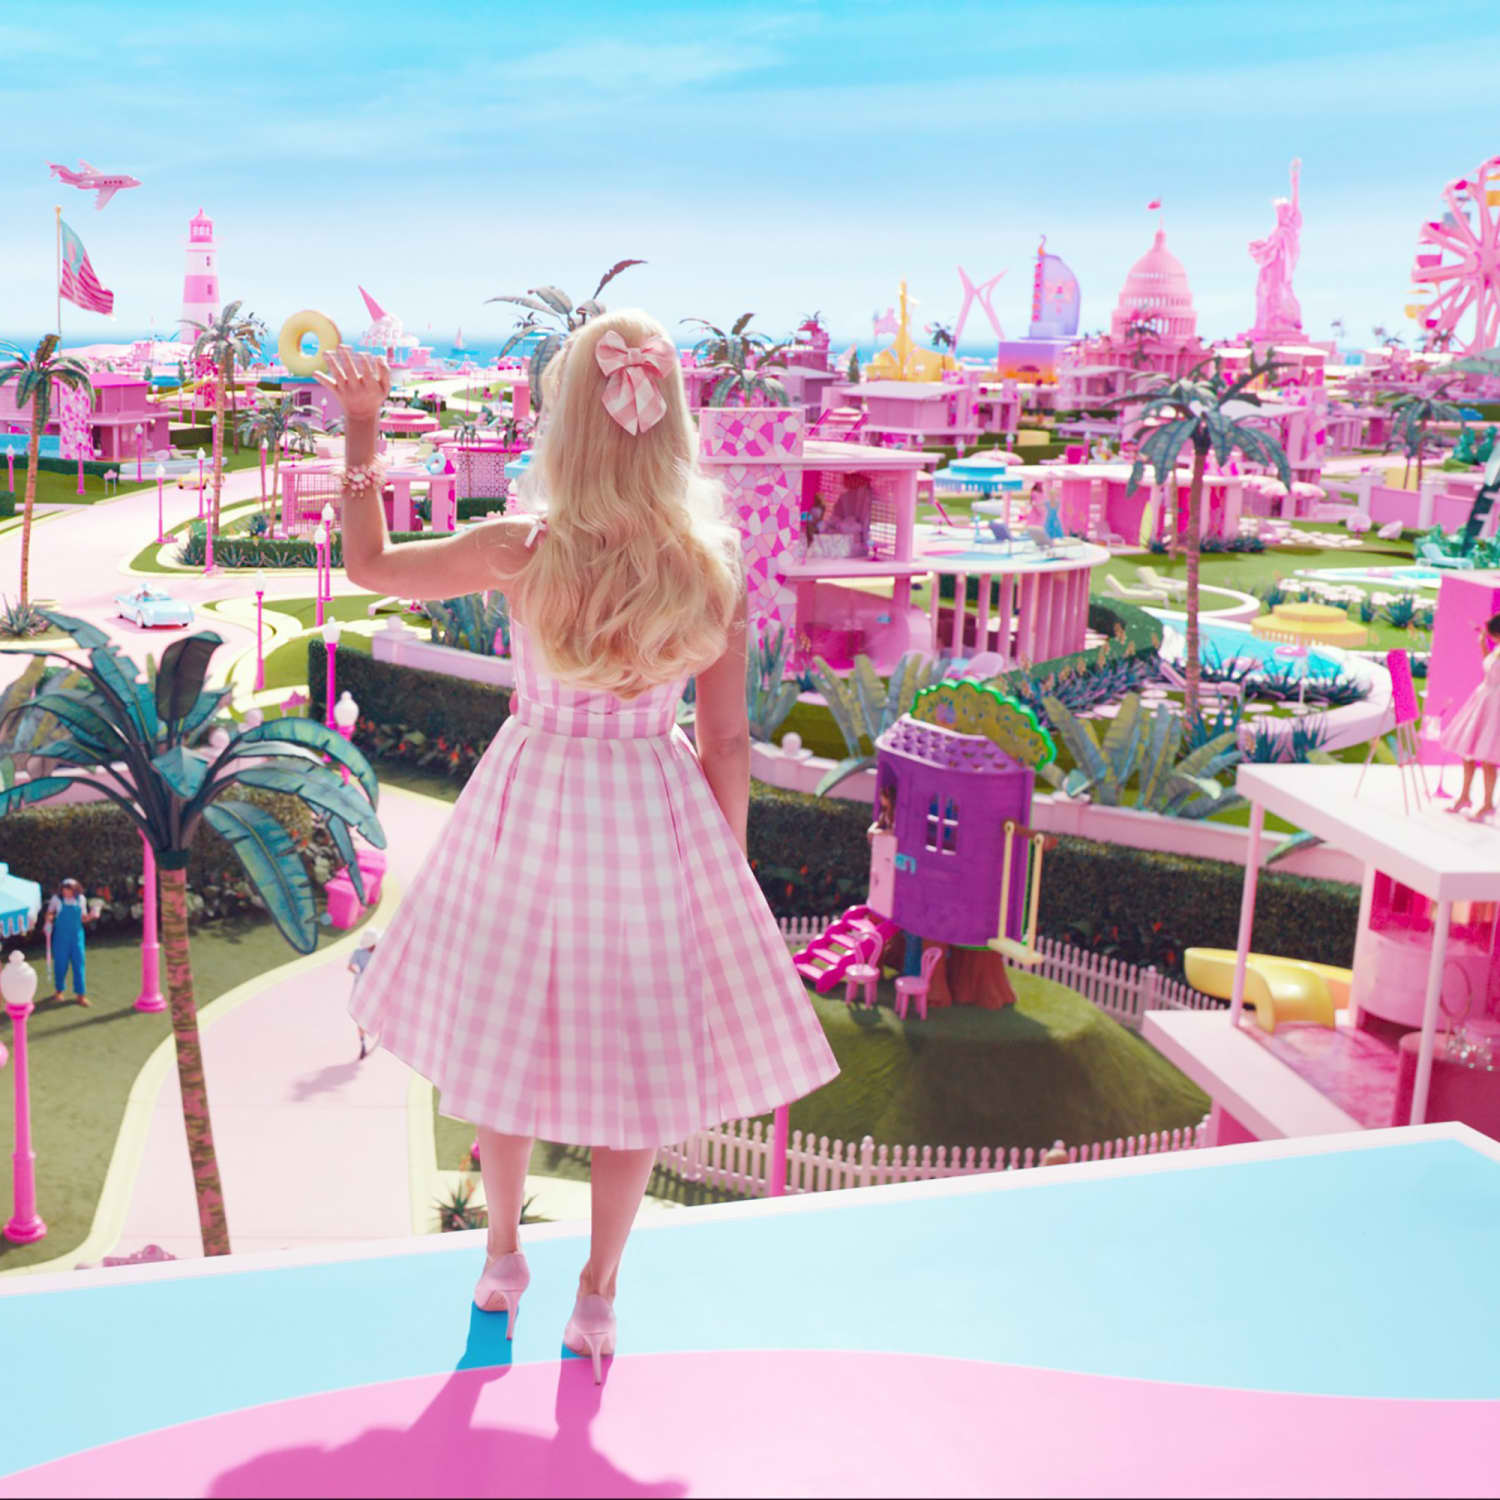 Barbie” Fans Are Sharing “Mojo Dojo Casa House” Spaces